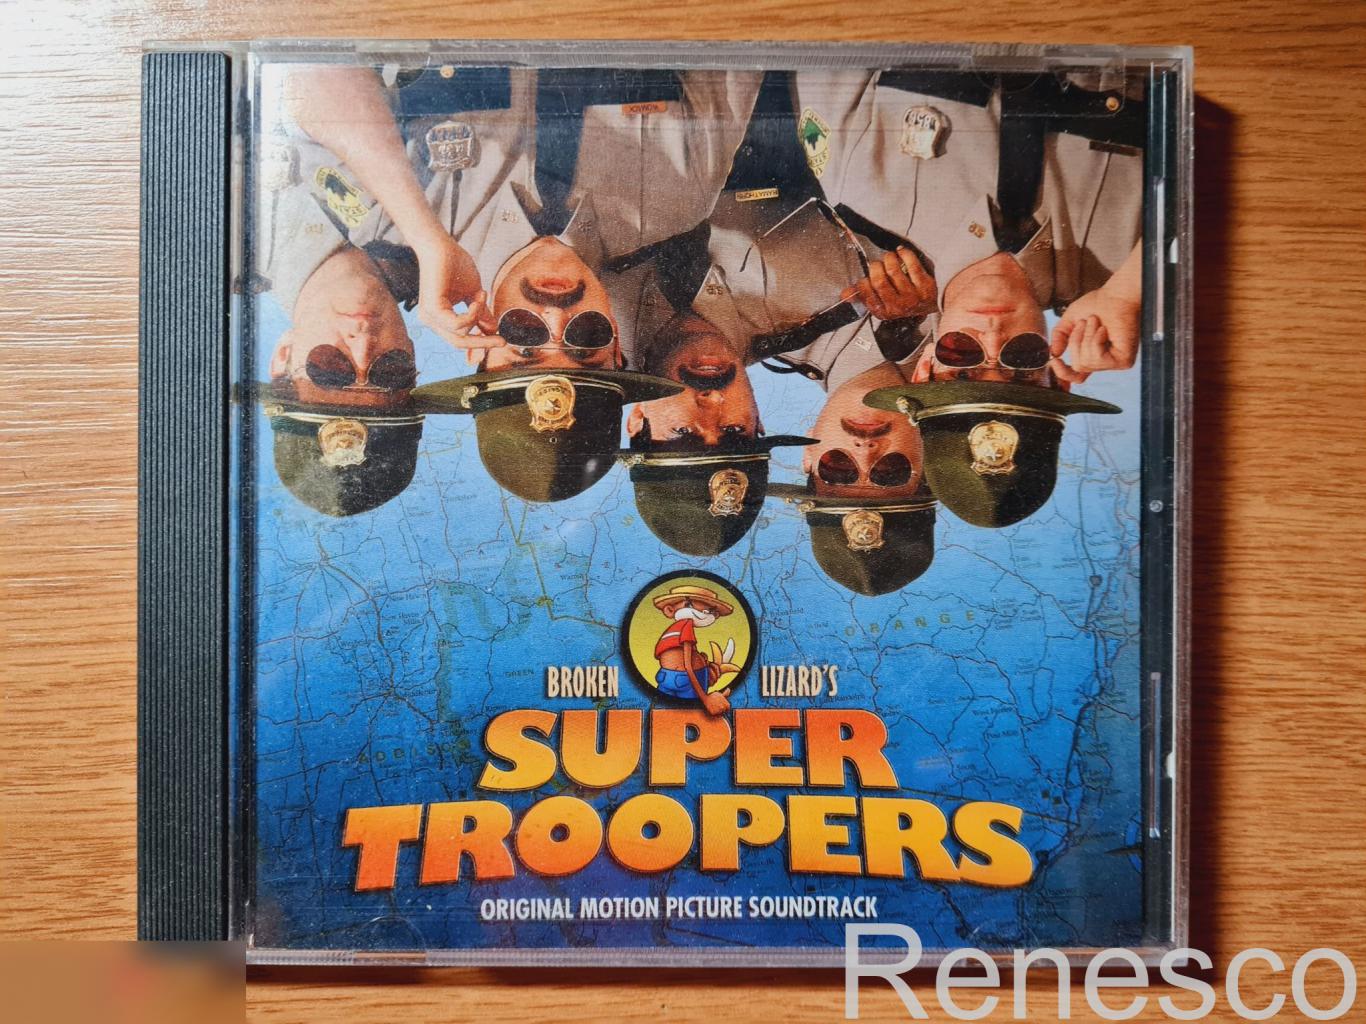 Super Troopers - Original Motion Picture Soundtrack (USA) (2002)